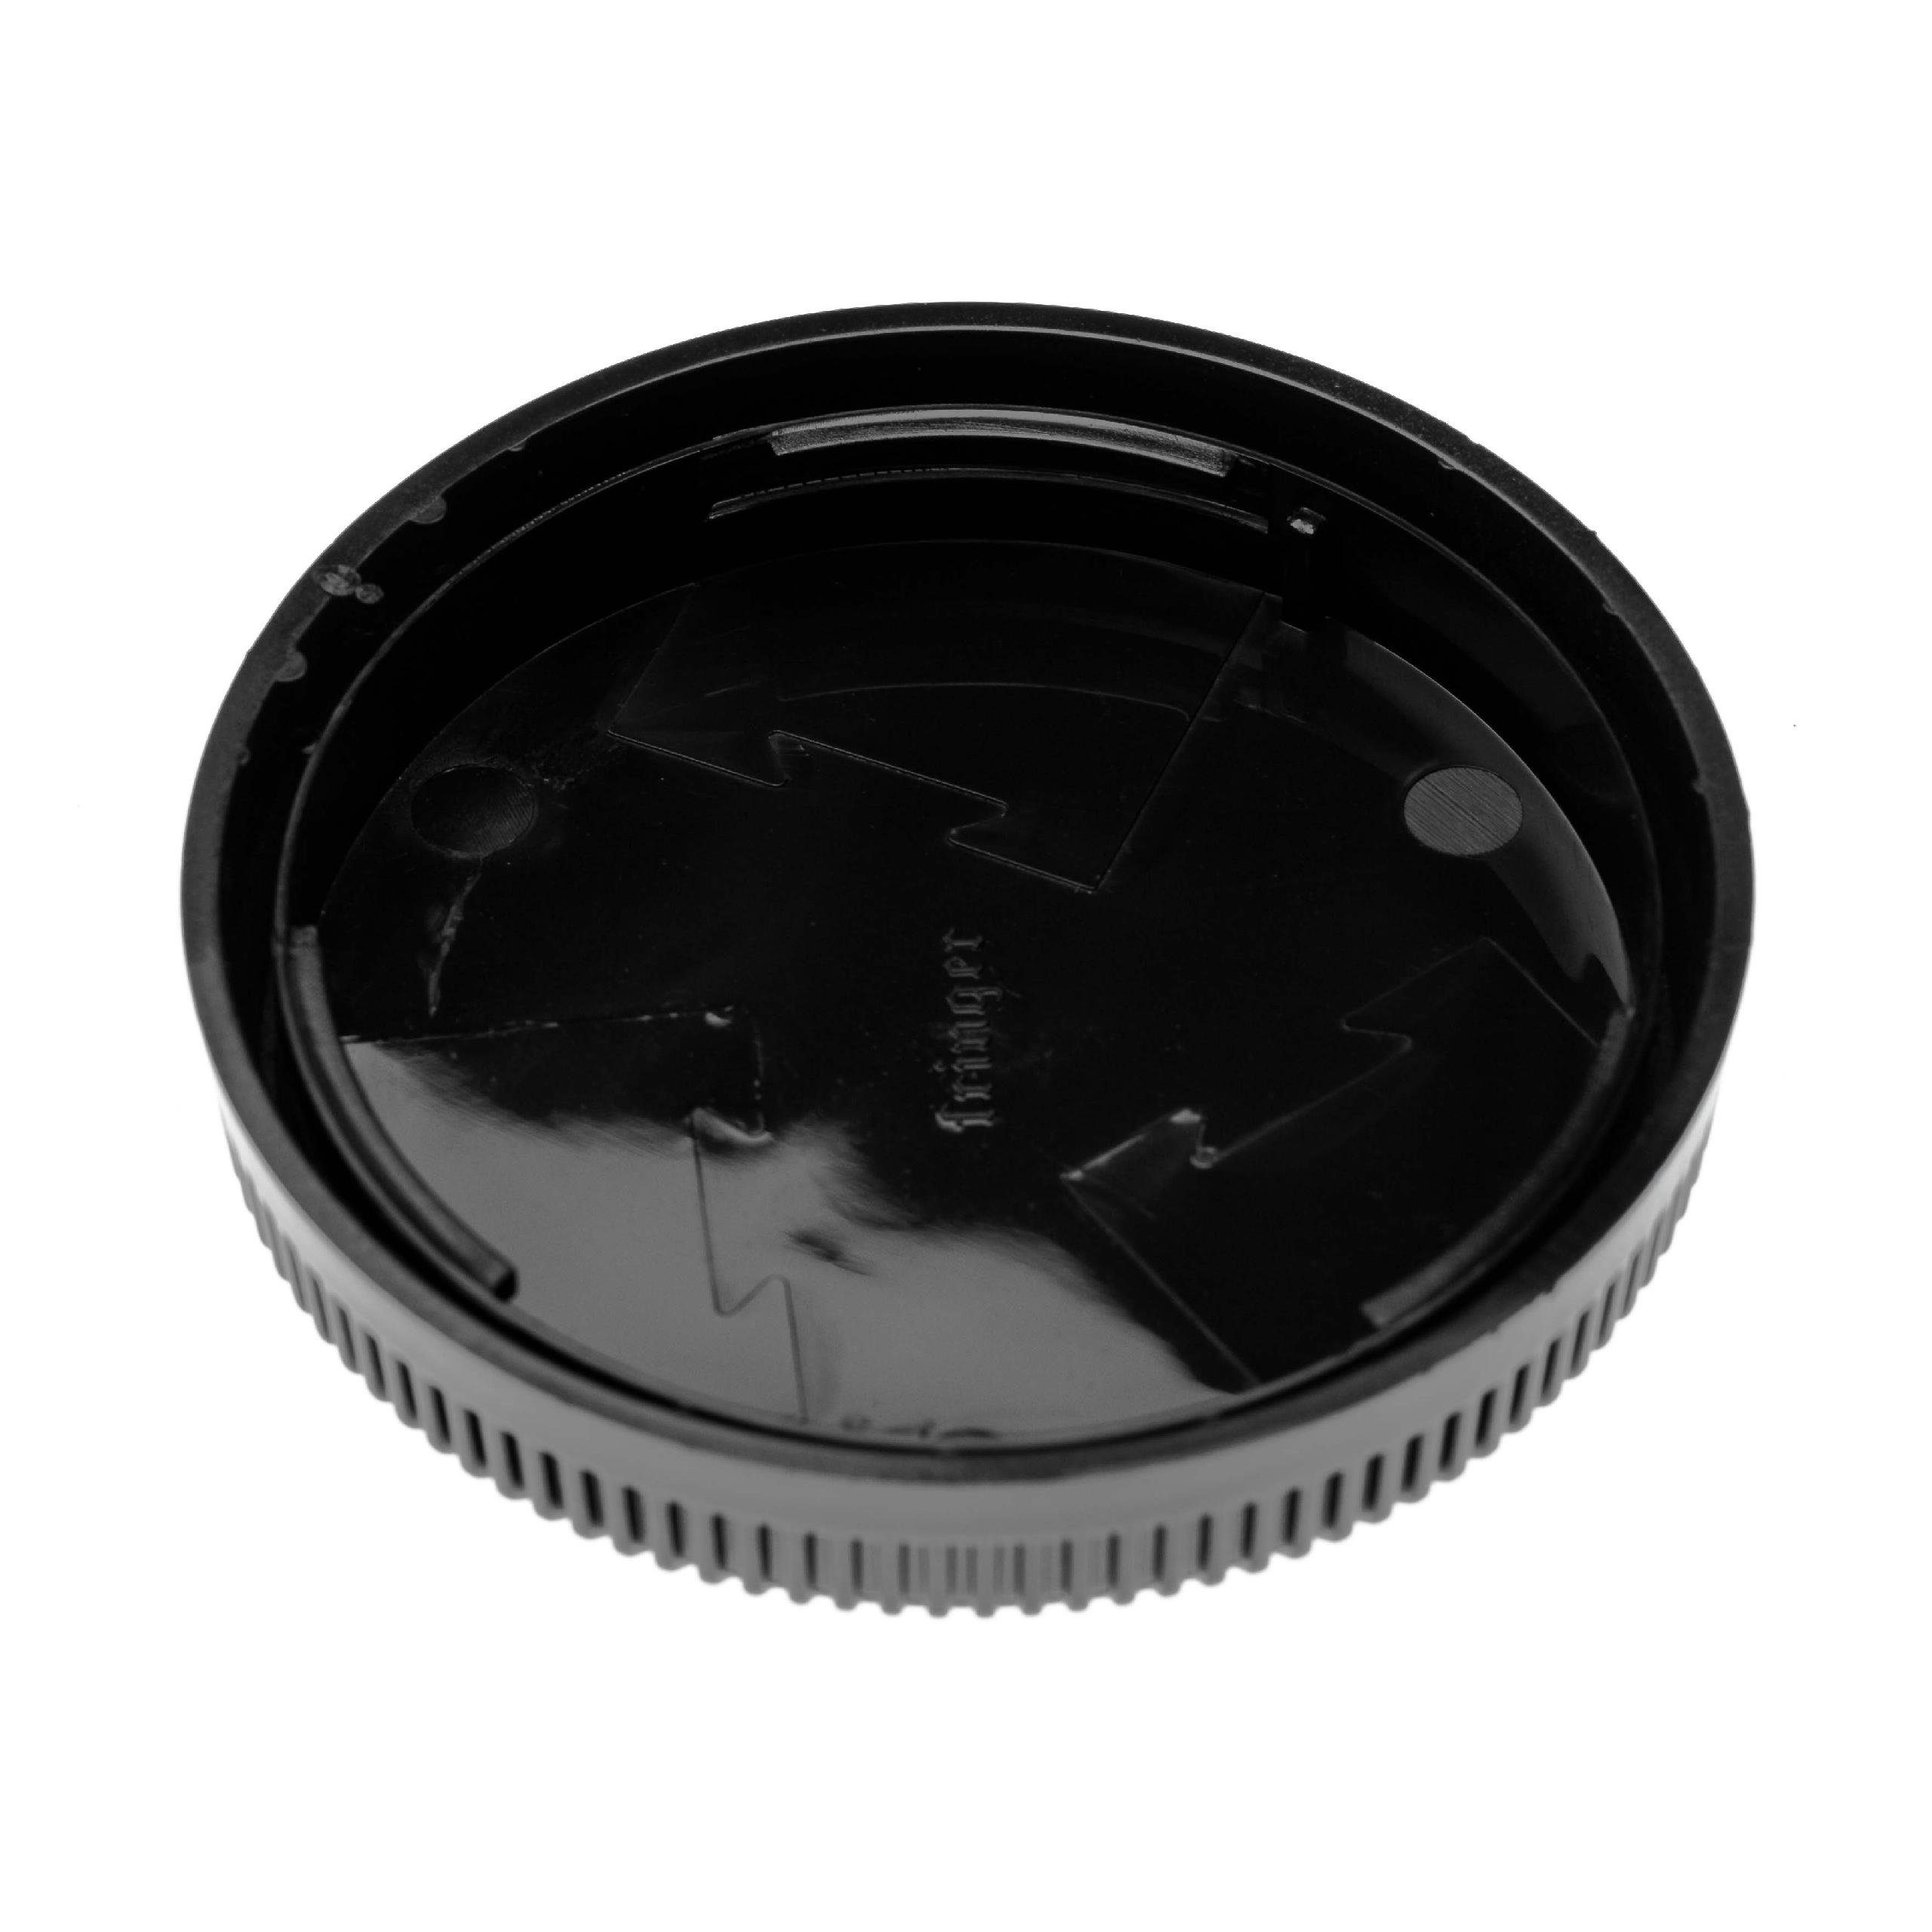 vhbw Fujifilm Objektivrückdeckel für Kamera passend GFX-Serie